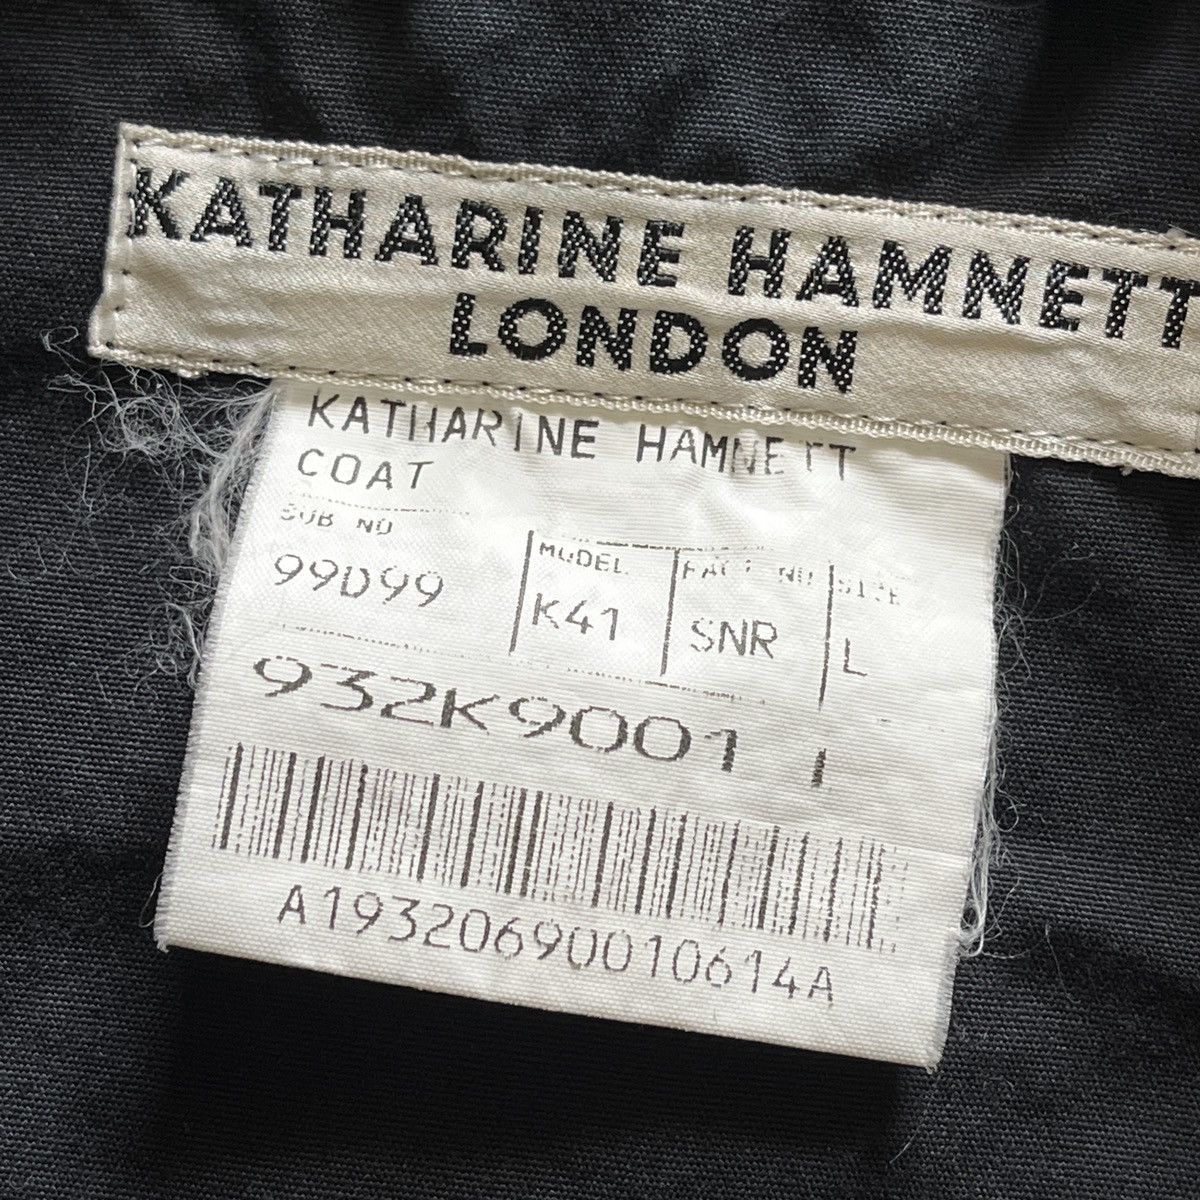 Katharine Hamnett London - Katharine Hamnett Designer Parkas Jacket - 6